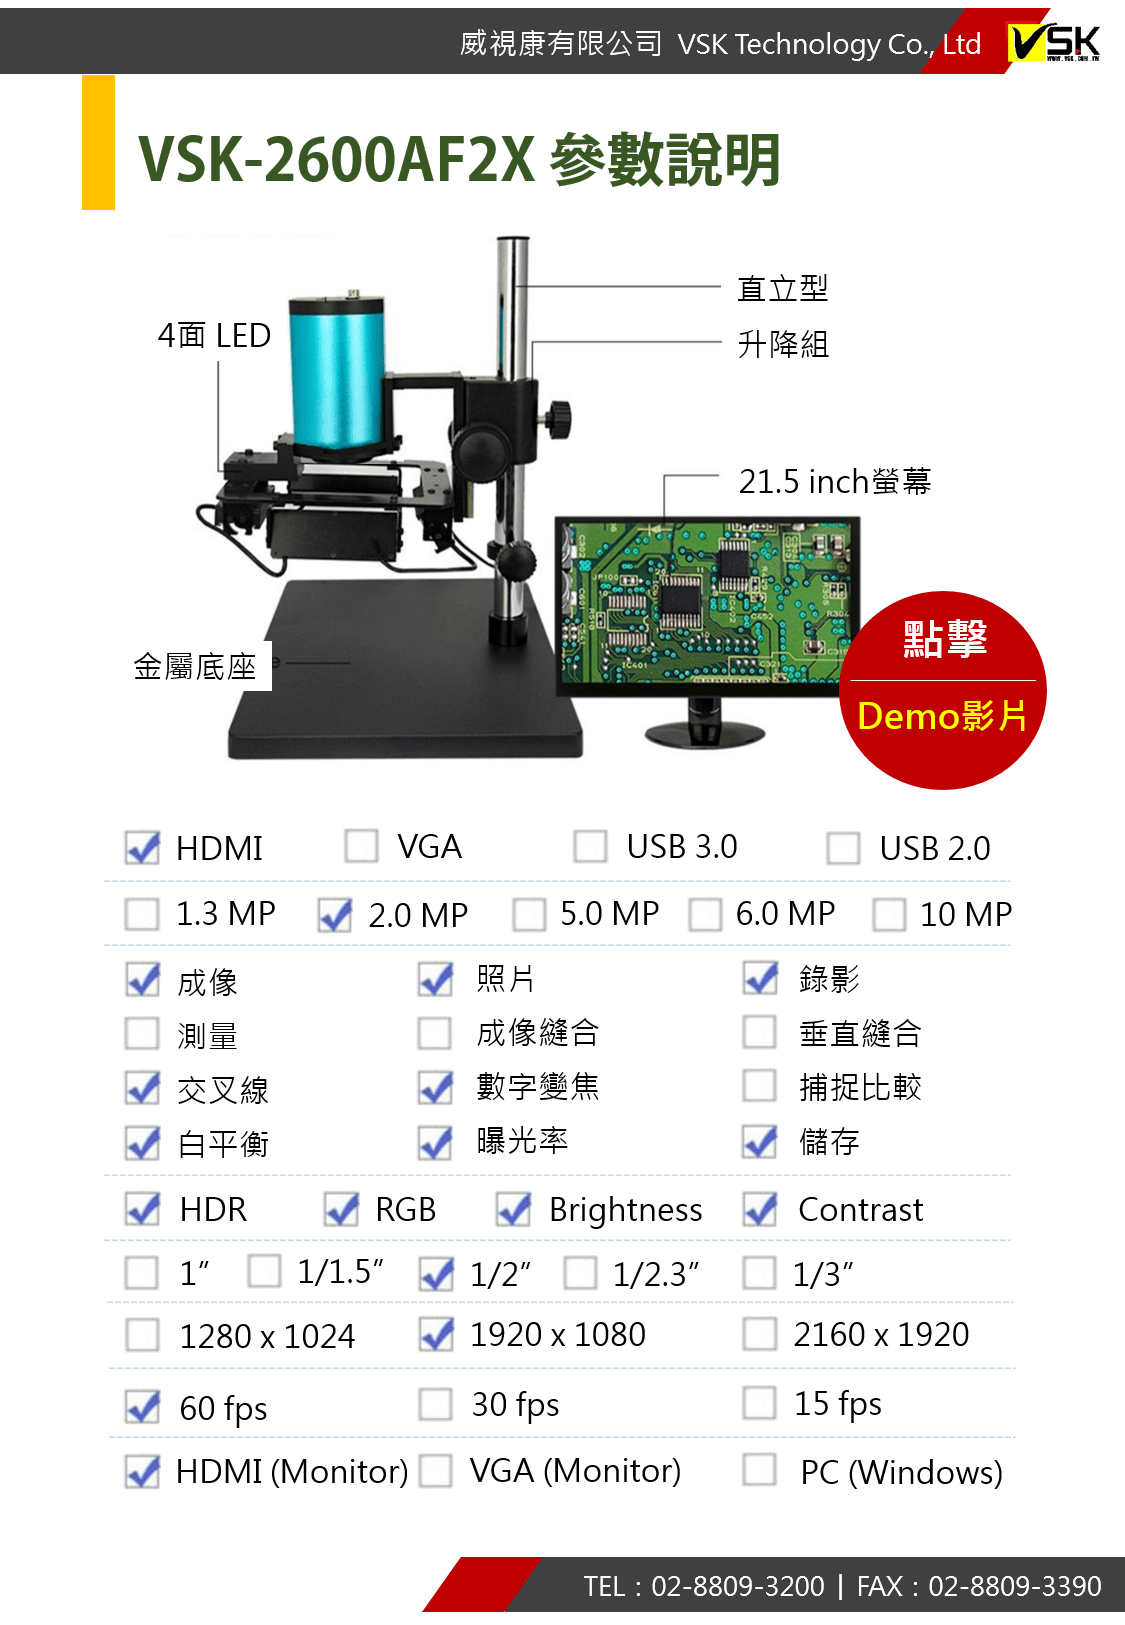 VSK-2600AF2X 參數說明 HDMI 2.0 MP 成像 交叉線 白平衡 照片 數字變焦 曝光率 錄影 儲存 1920 x 1080 HDMI (Monitor)  60 fps